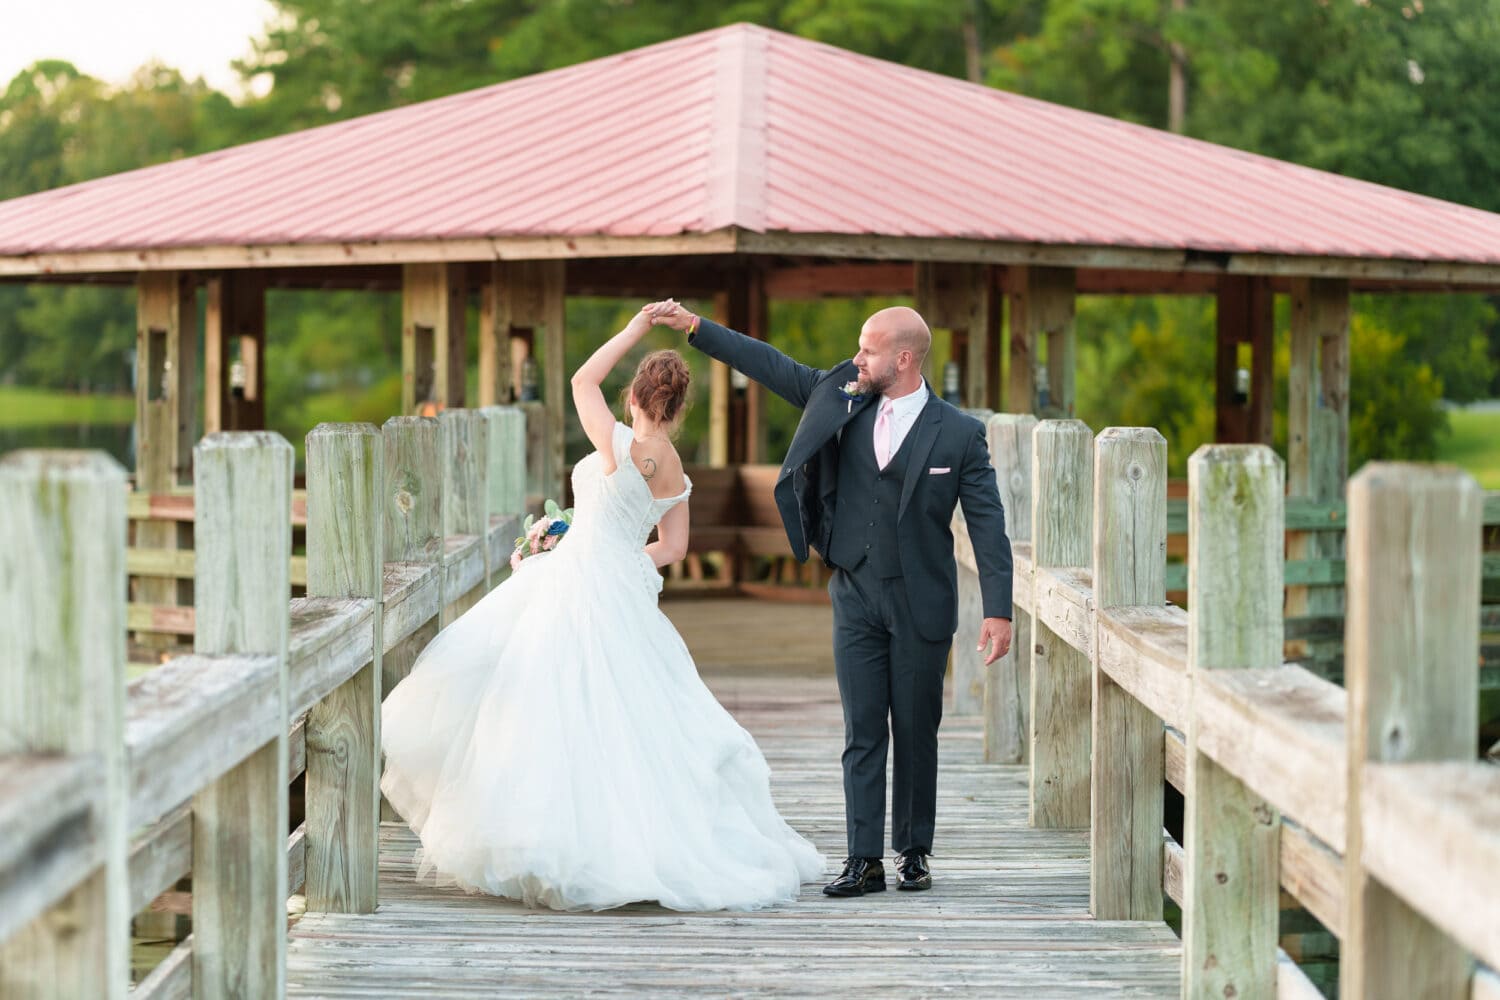 Spinning bride on the boardwalk - The Pavilion at Pepper Plantation